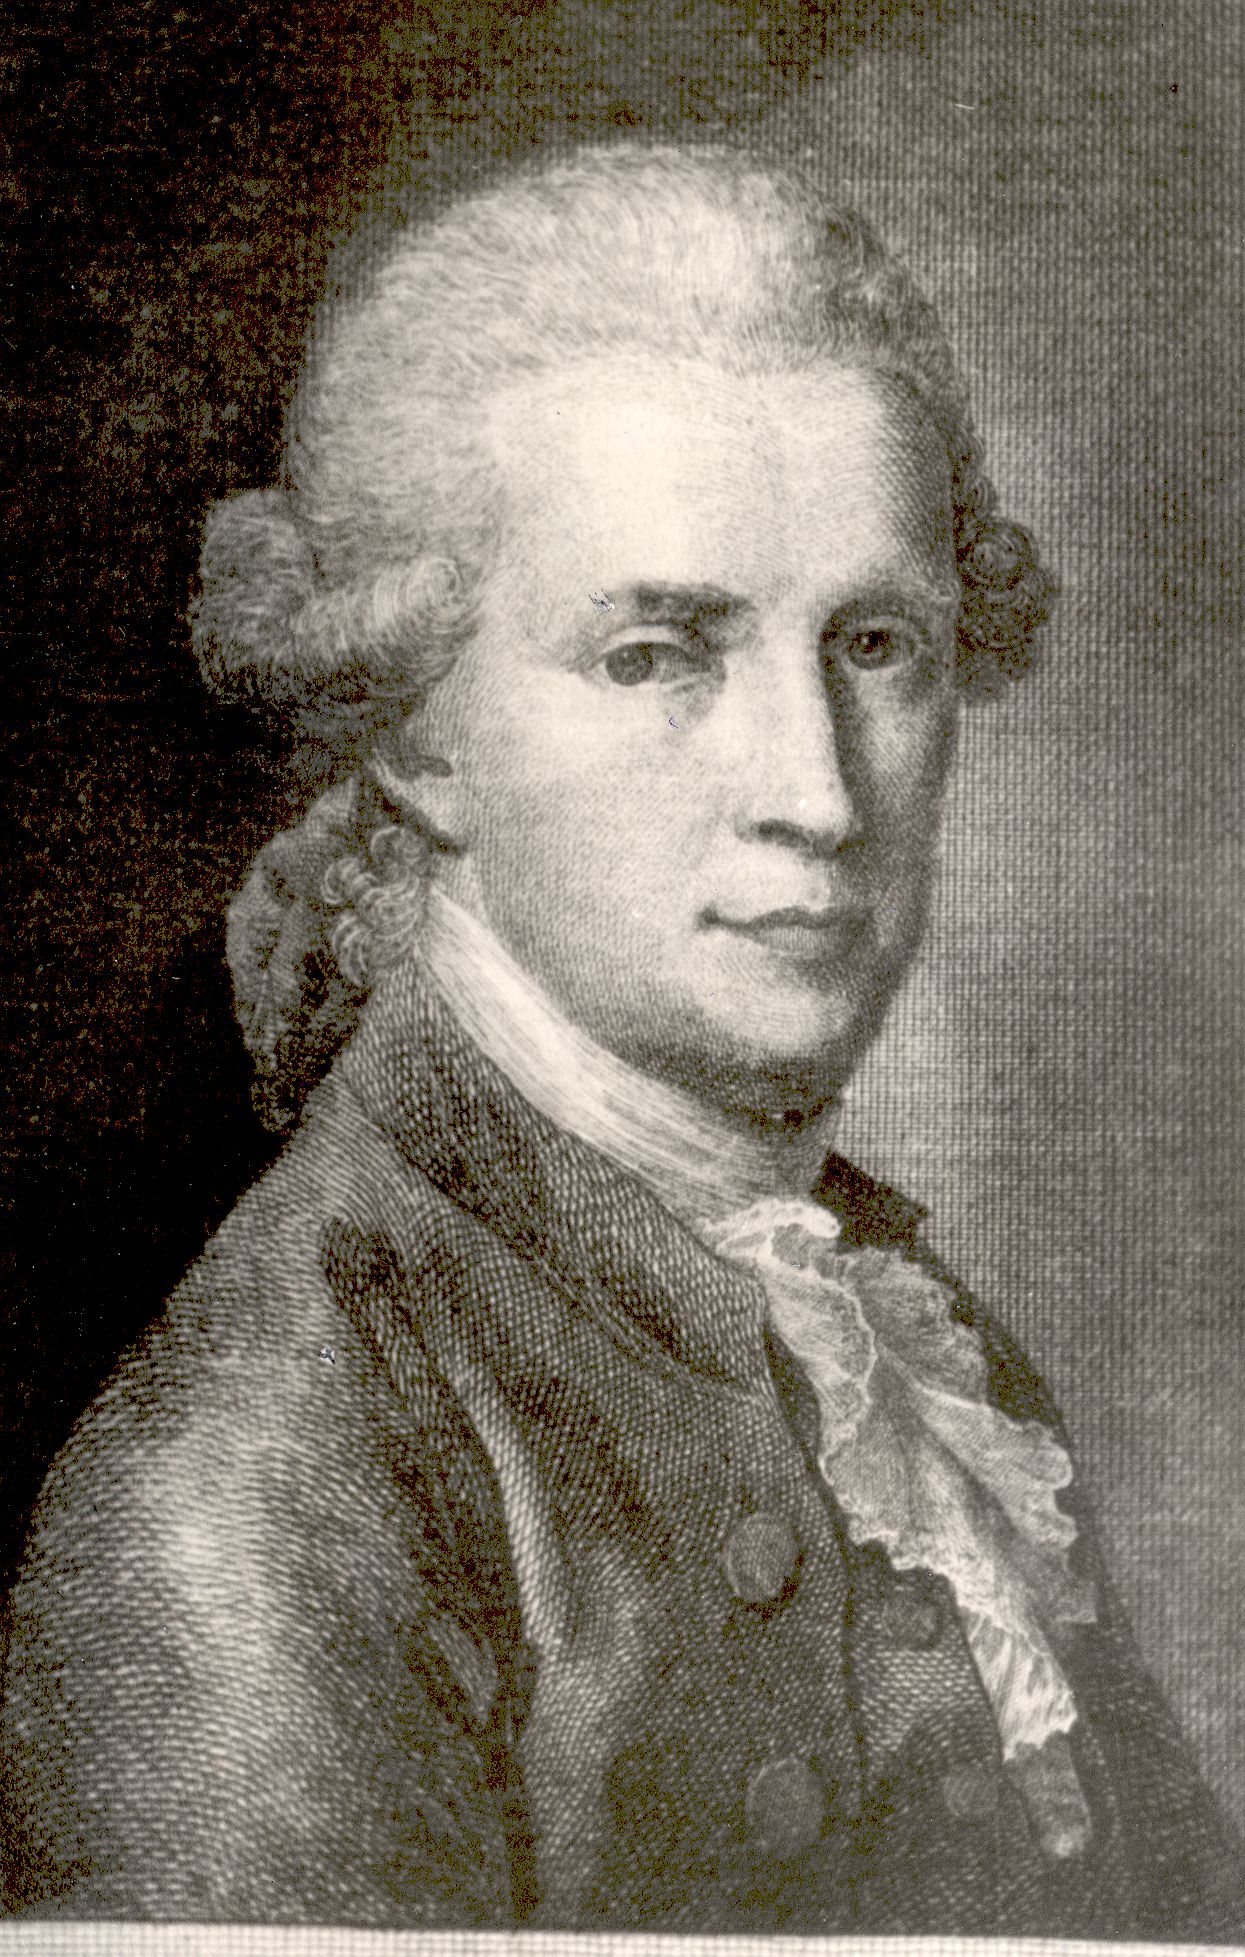 Johann Georg Zimmermann (1728-1795), German doctor and philosopher